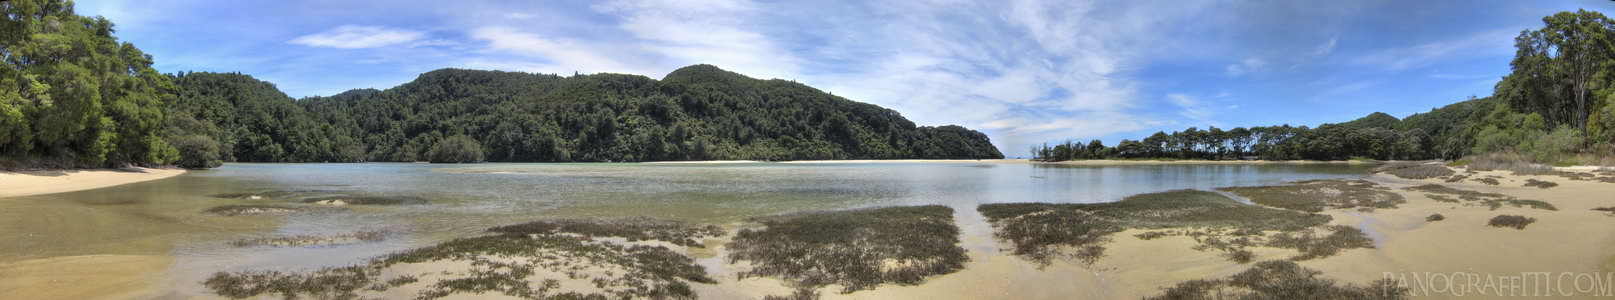 Tasman Bay - A river meeting the Tasman Bay